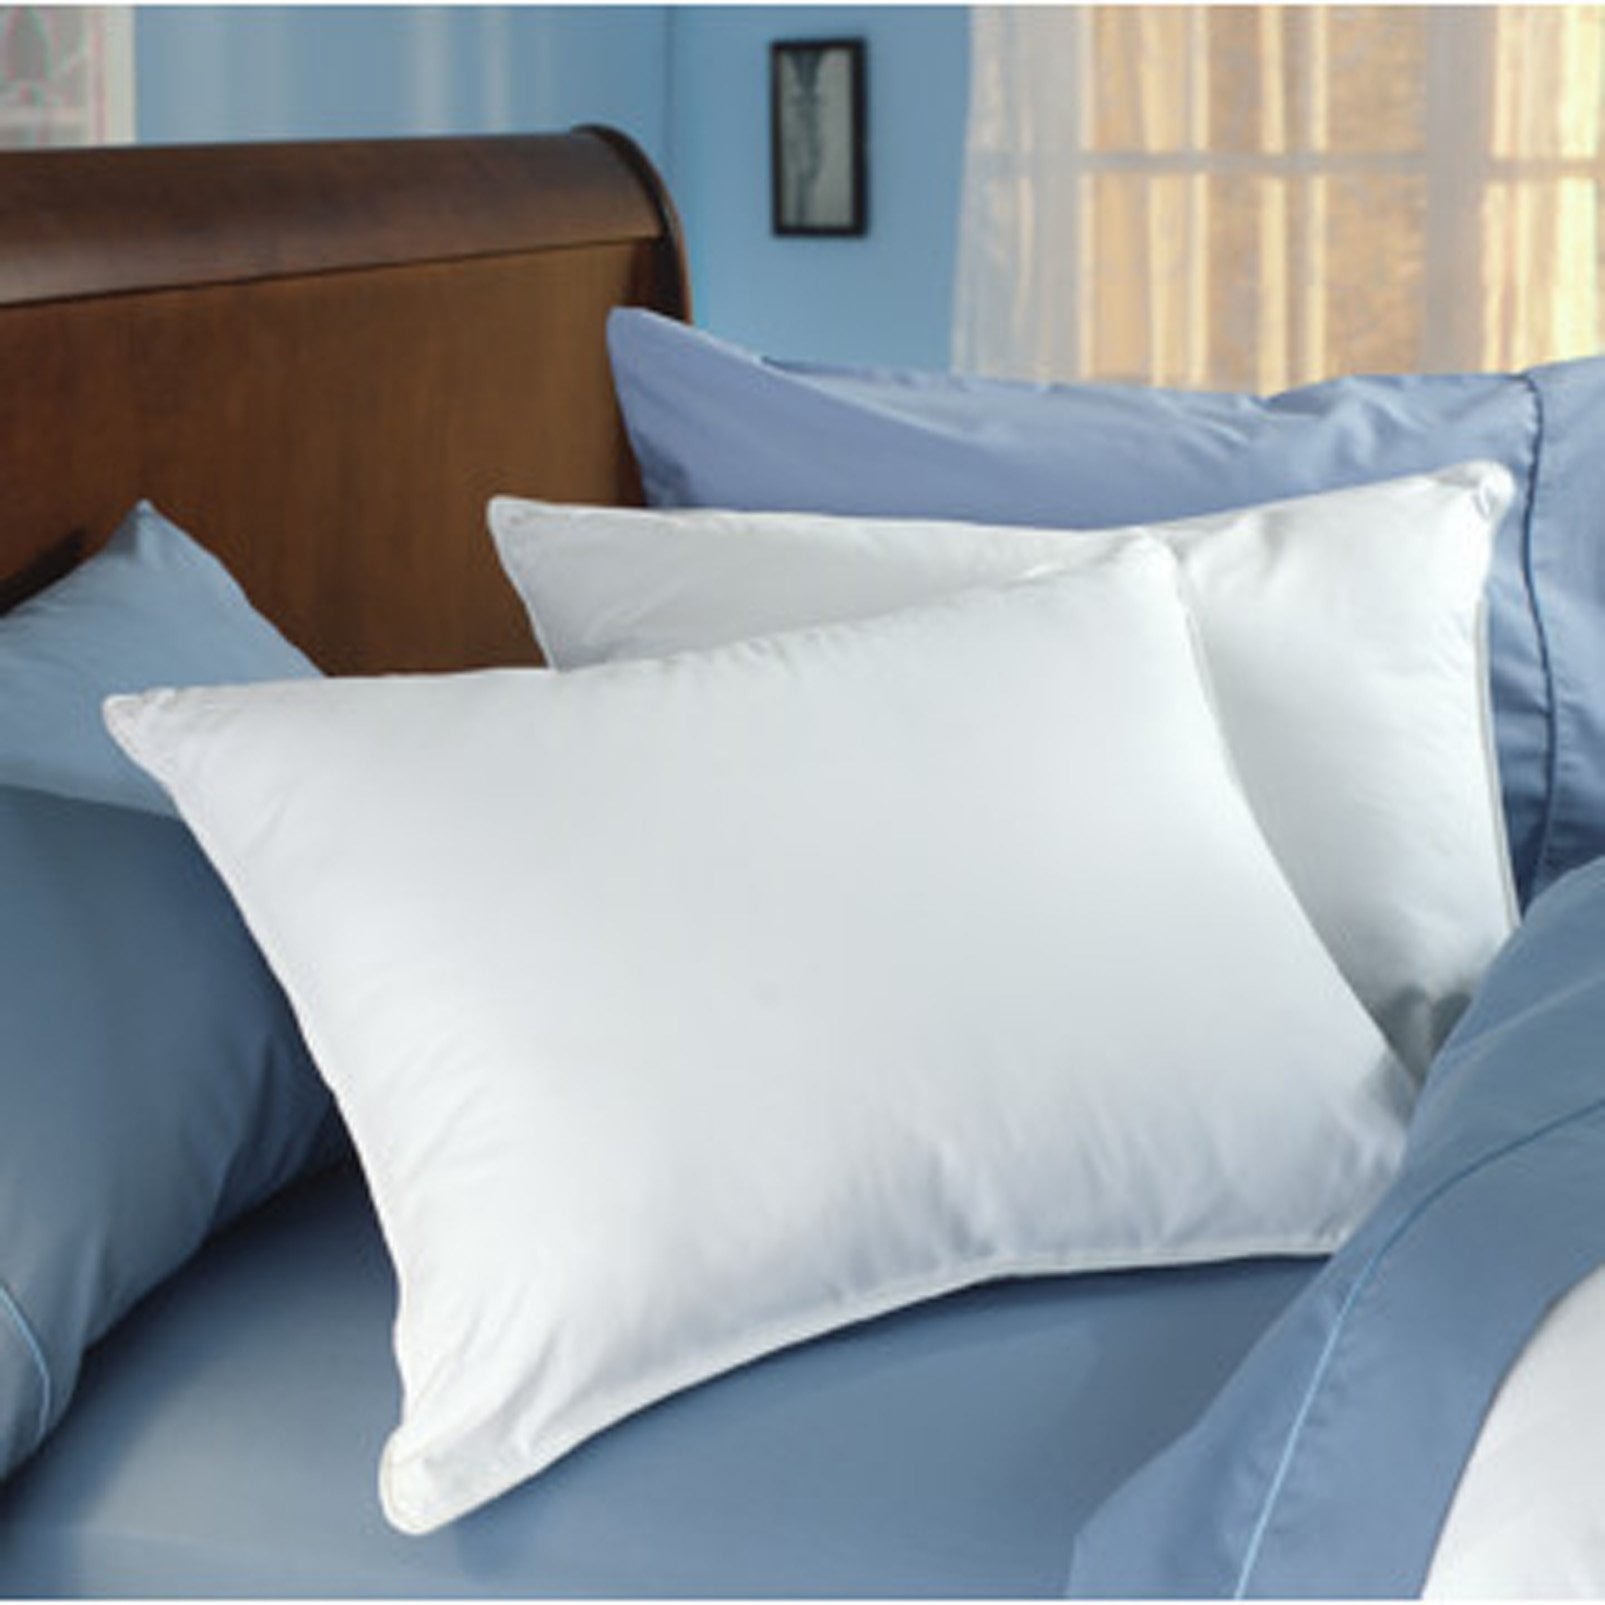 Envirosleep Dream Surrender Standard 2 Pillows Found at Embassy Suites